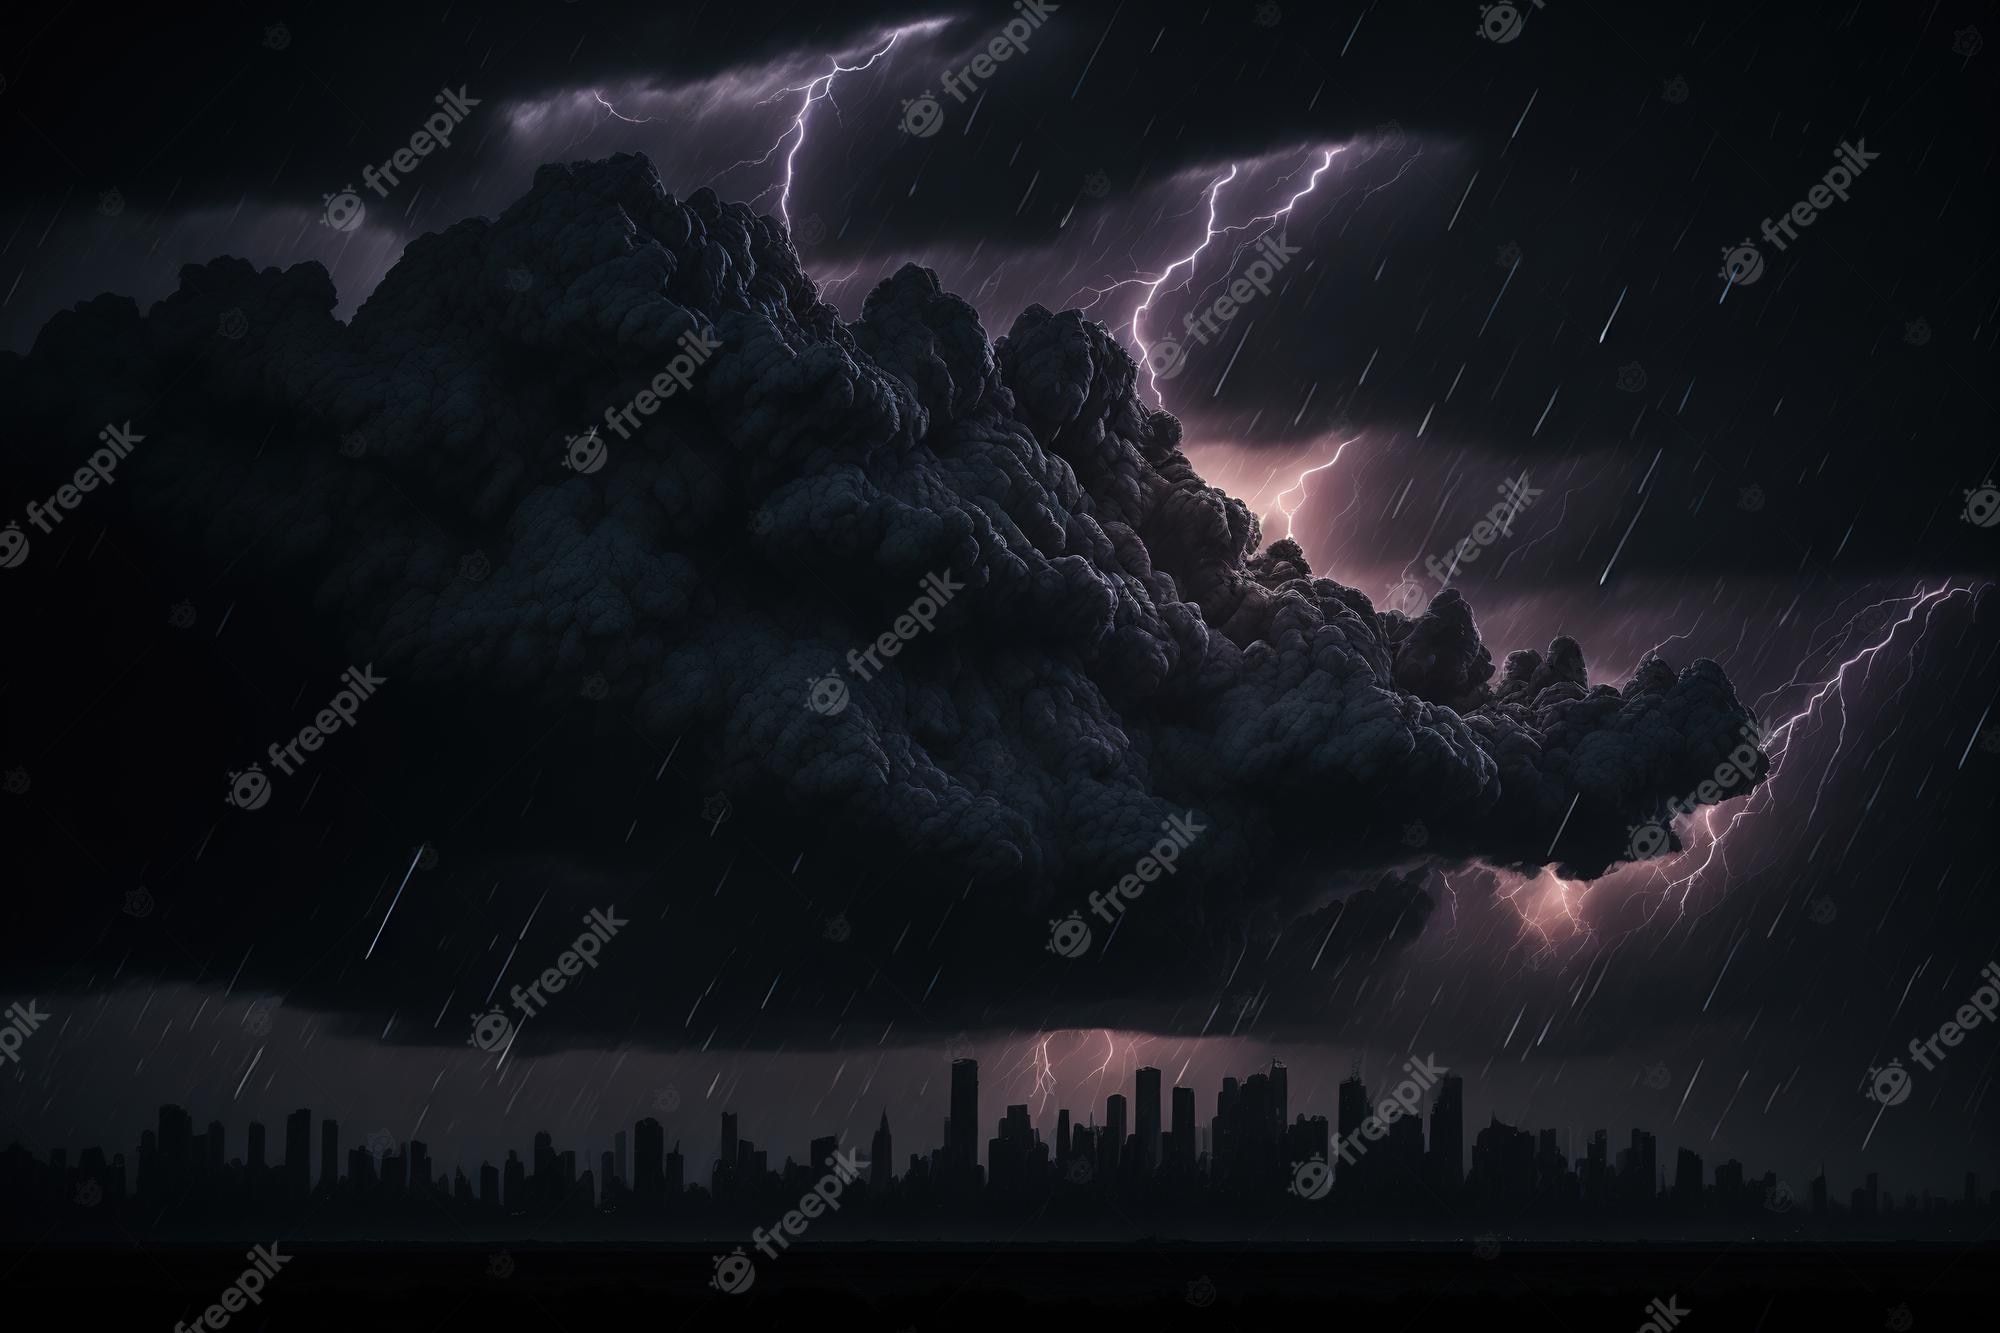 Dark Storm Image